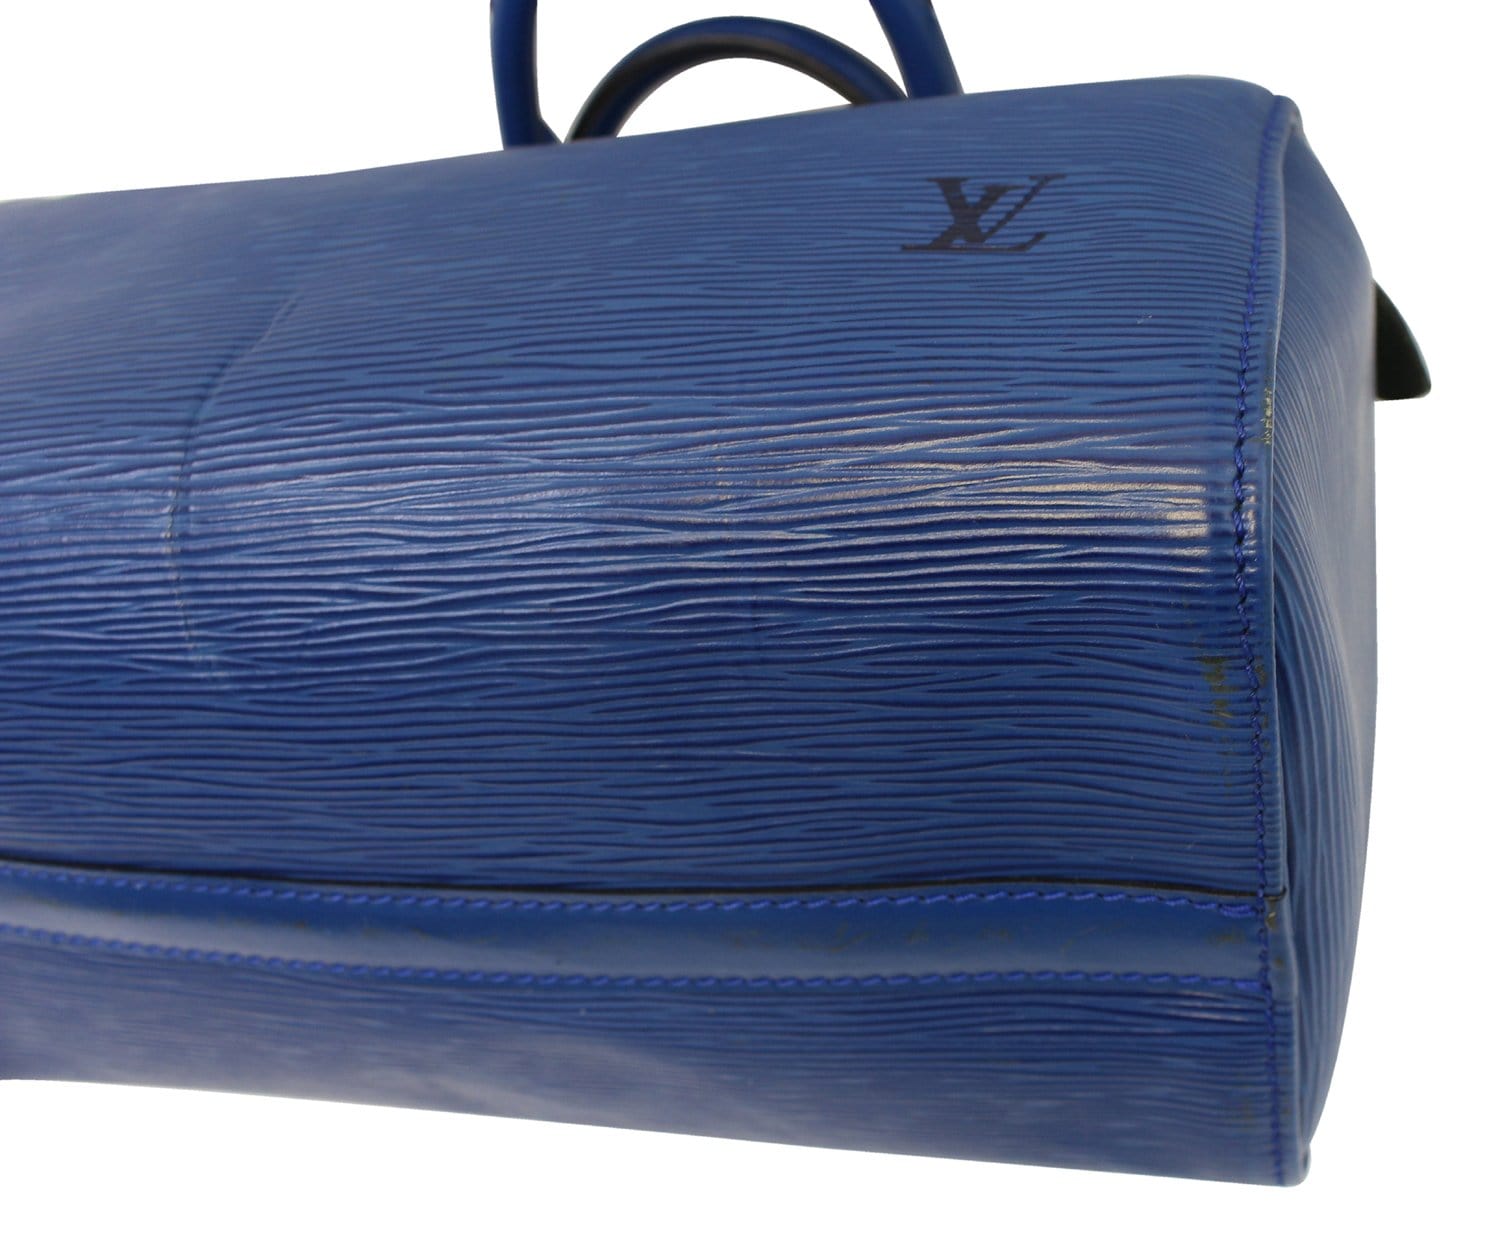 Louis Vuitton Epi Speedy 25. On website search for Blue: AO18352